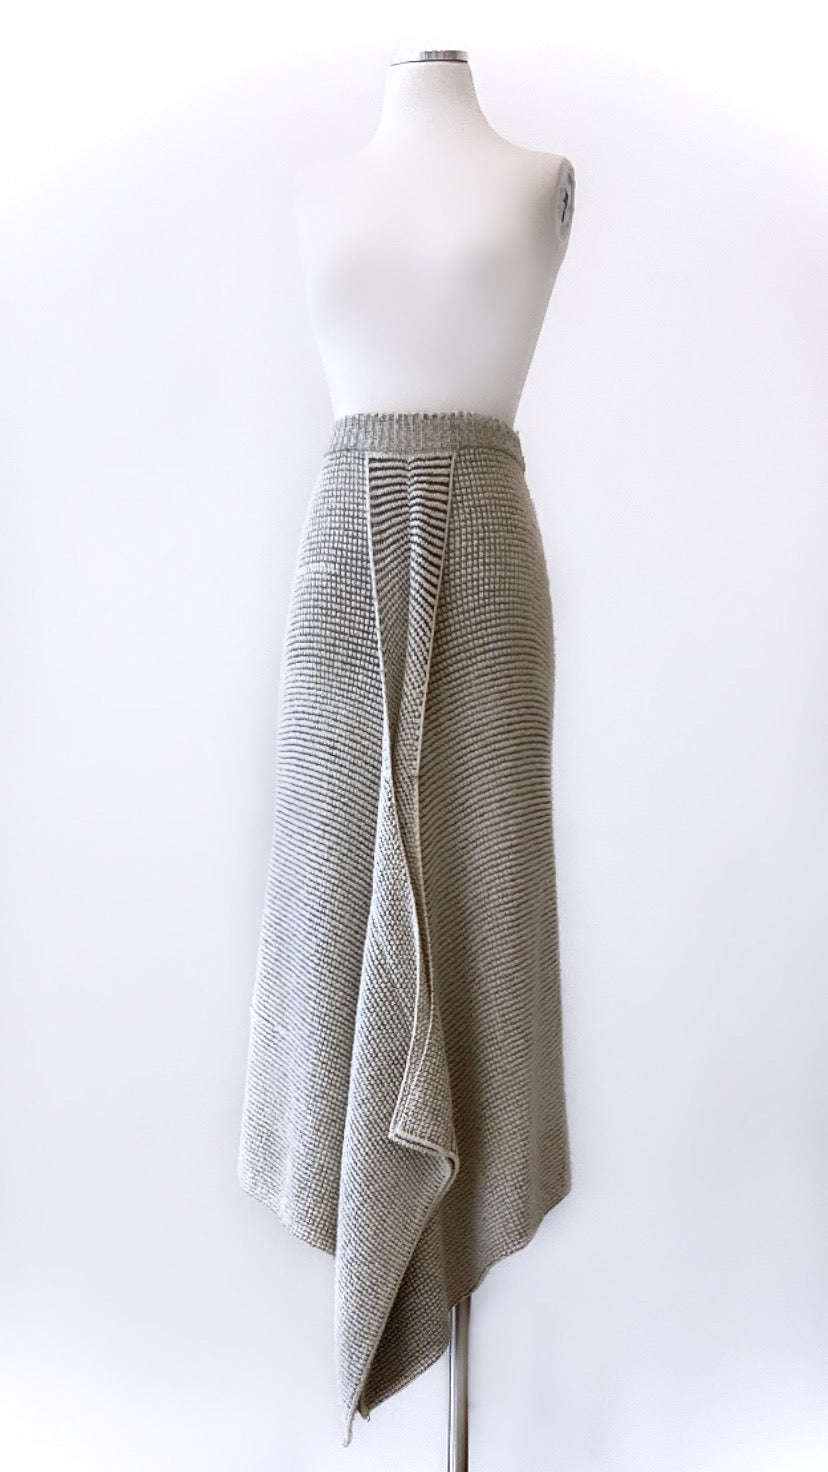 Stella McCartney knit skirt